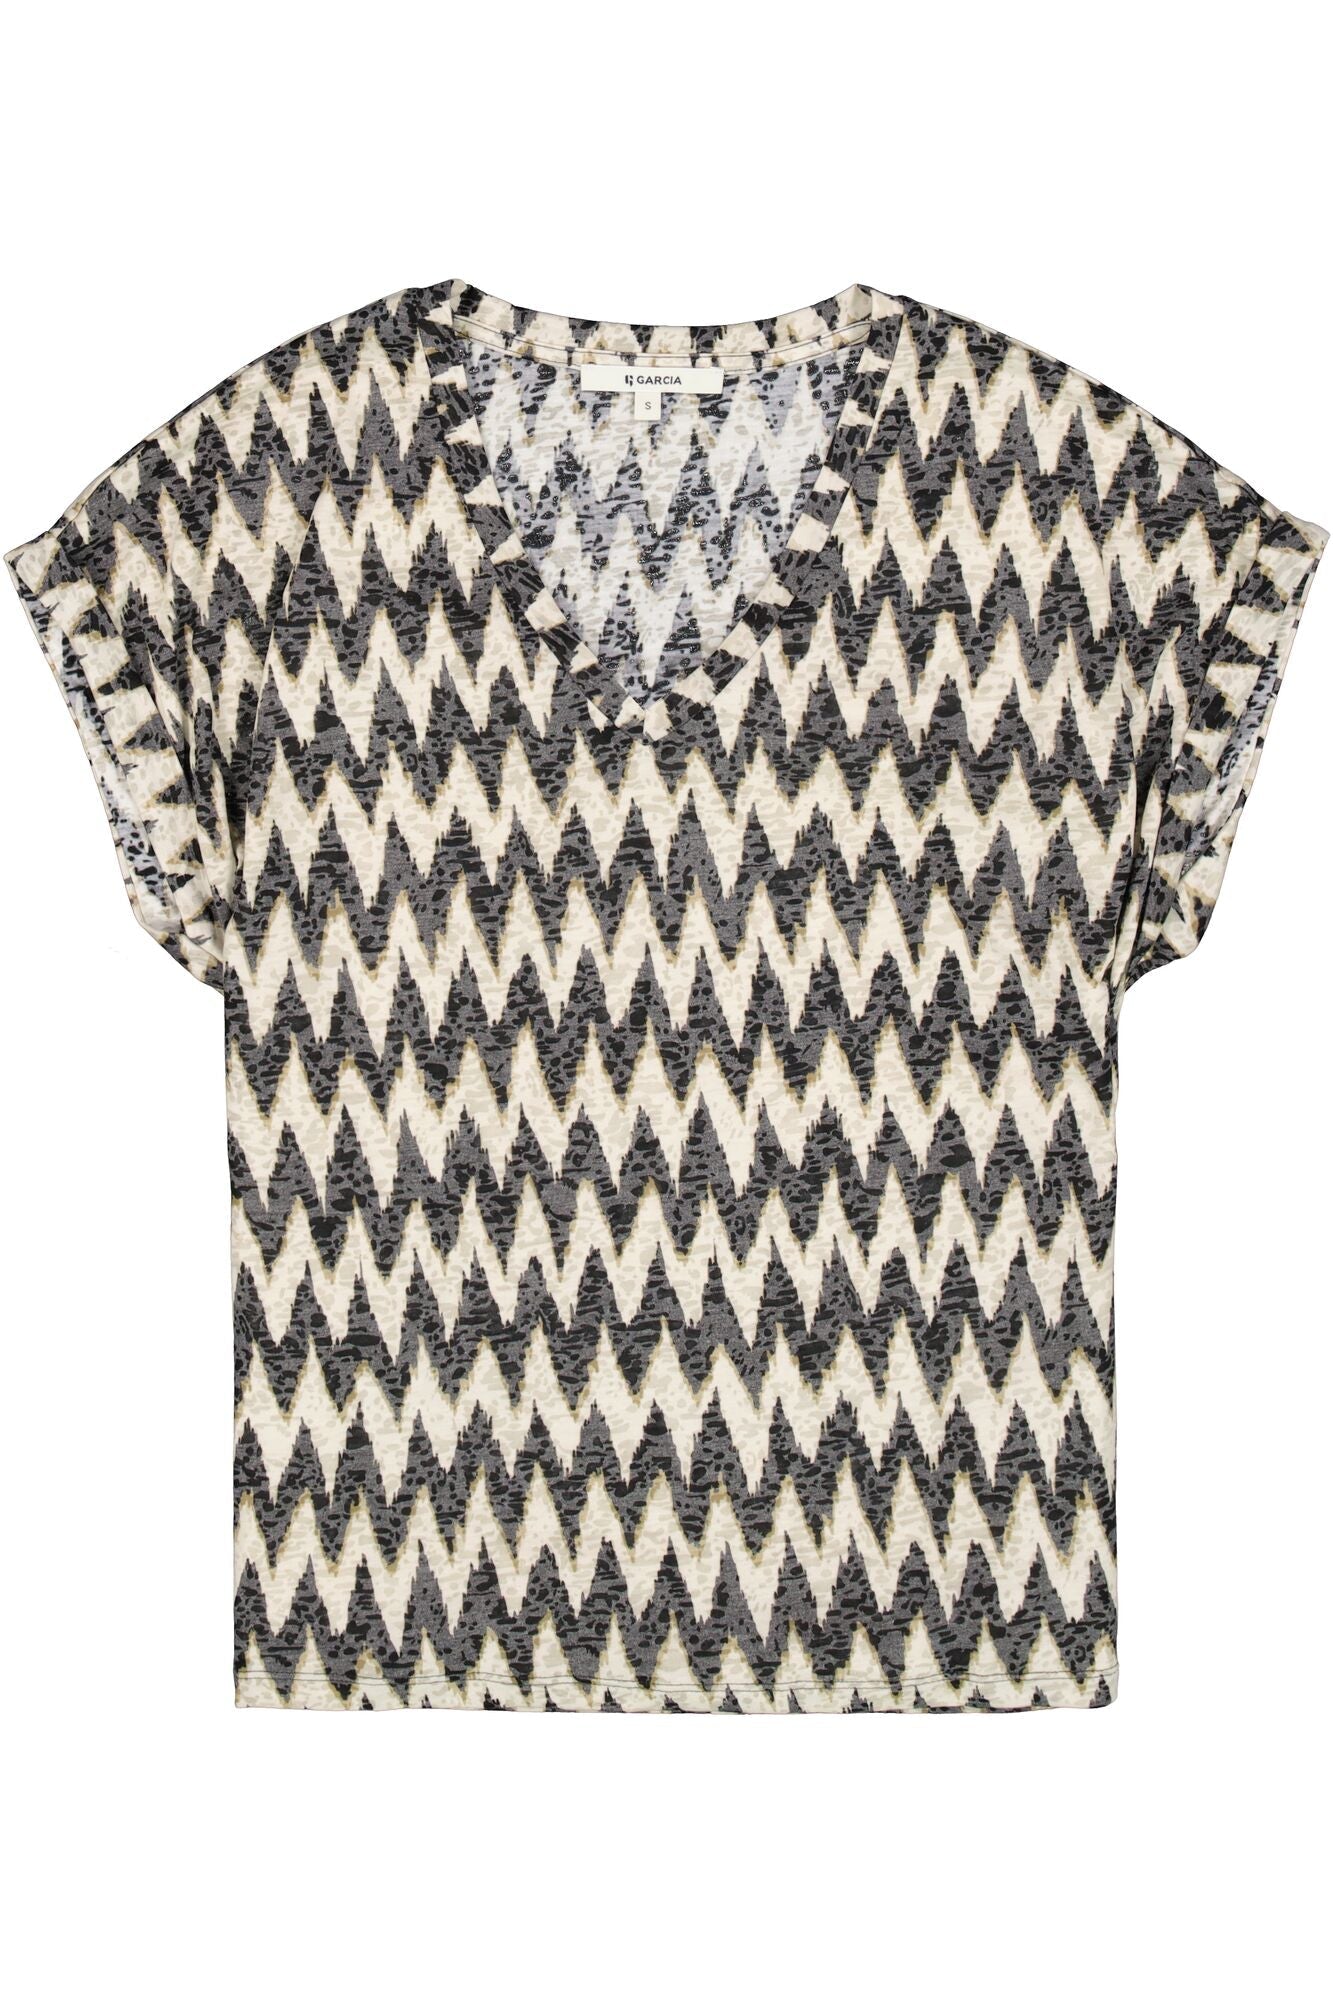 Garcia (O40003) Women's Short Cap Sleeve Zigzag Burnout T-Shirt with V-neck in Black & Cream zig zag striped